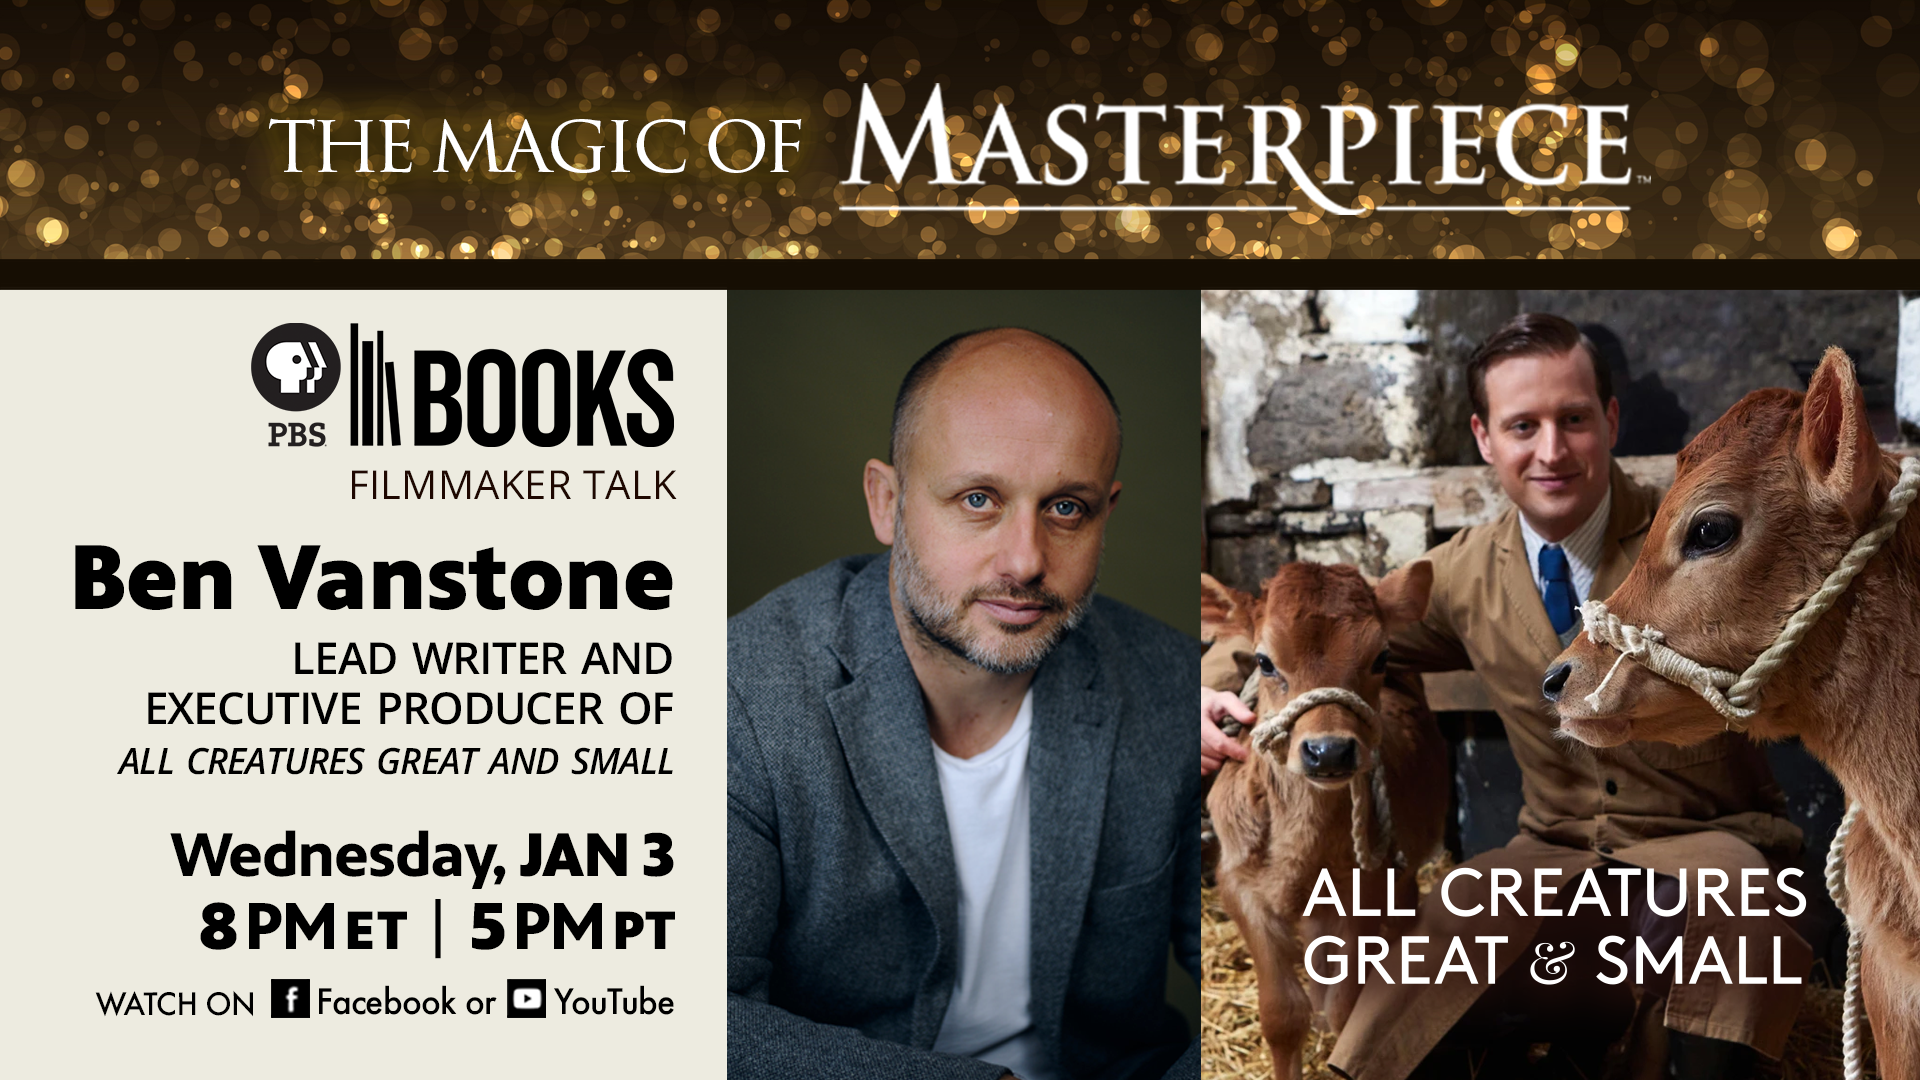 The Magic of Masterpiece with Ben Vanstone program information